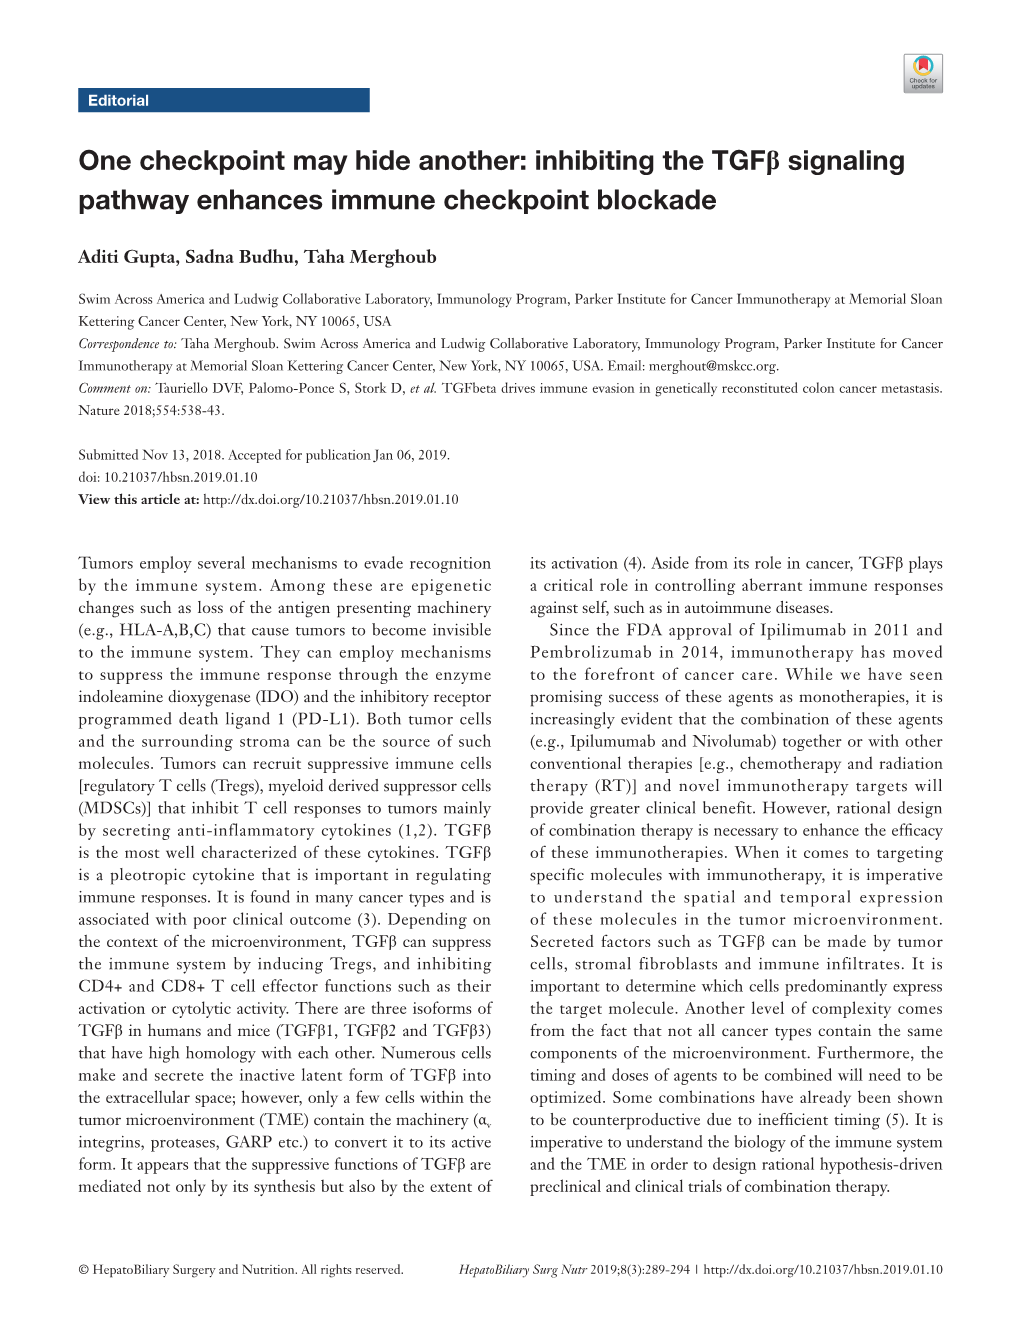 Inhibiting the Tgfβ Signaling Pathway Enhances Immune Checkpoint Blockade